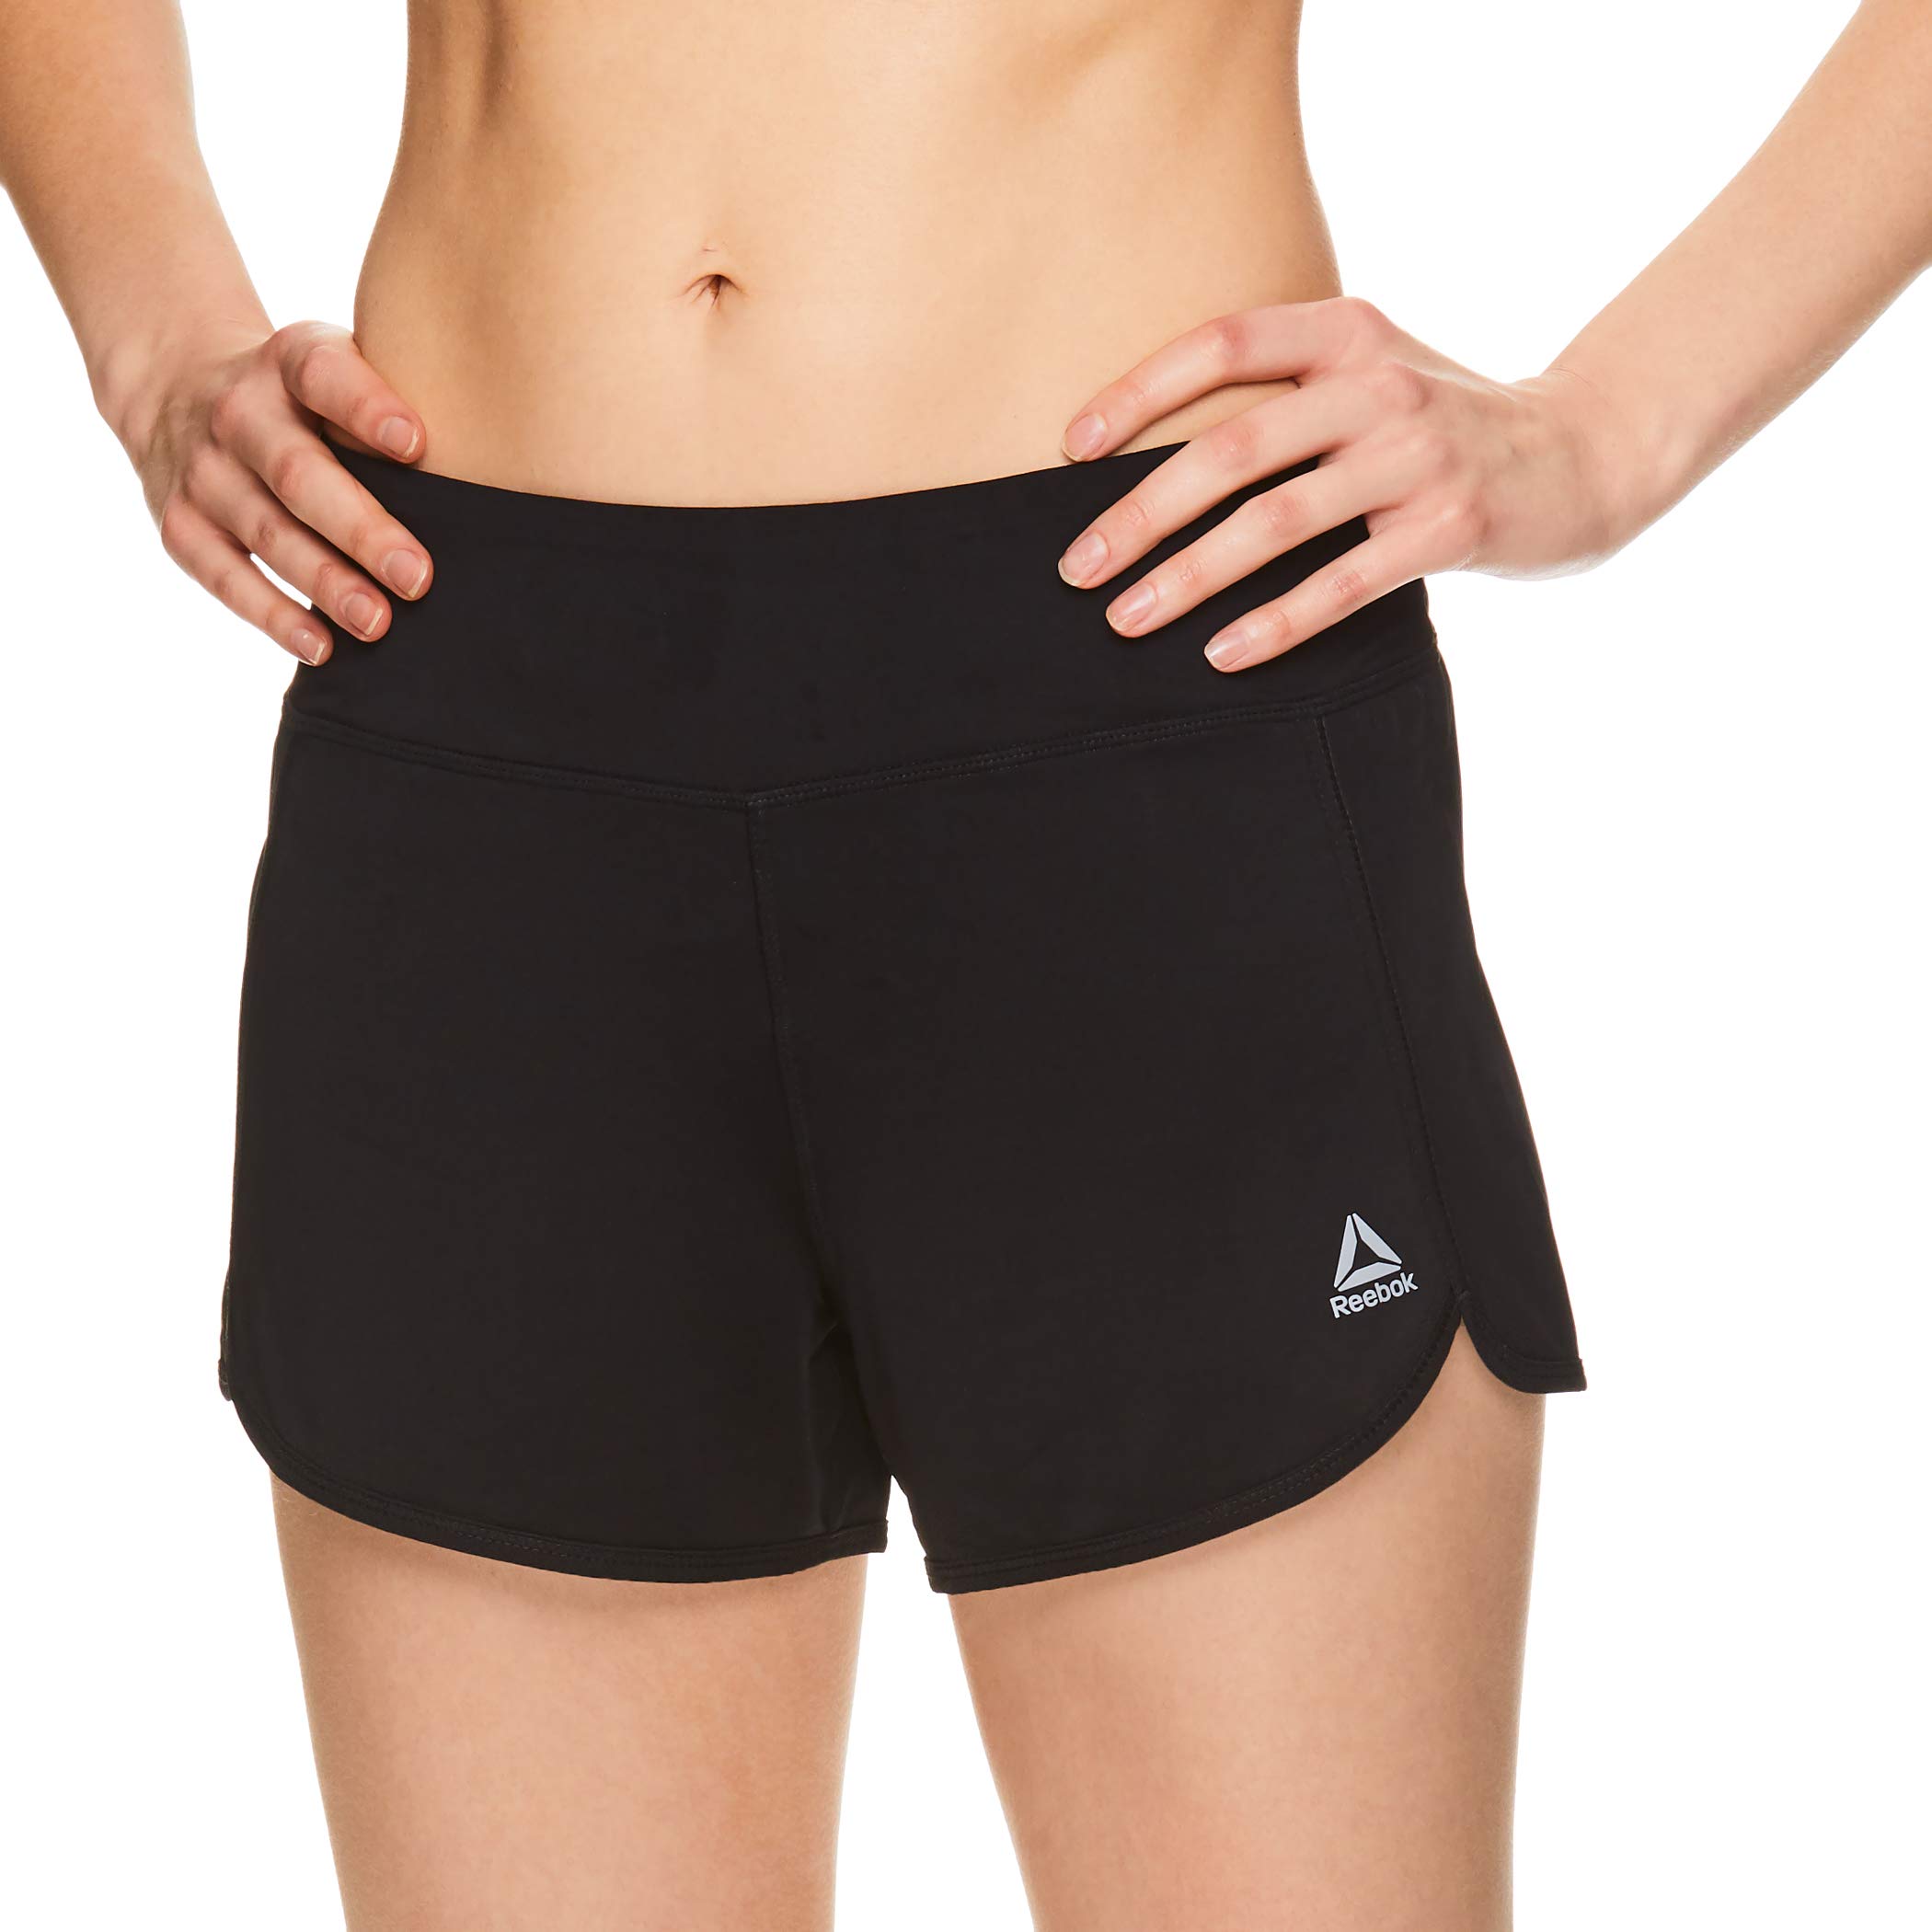 Reebok Women's Athletic Workout Shorts - Gym Training & Running Short - 3 Inch Inseam - Mara Black, Large